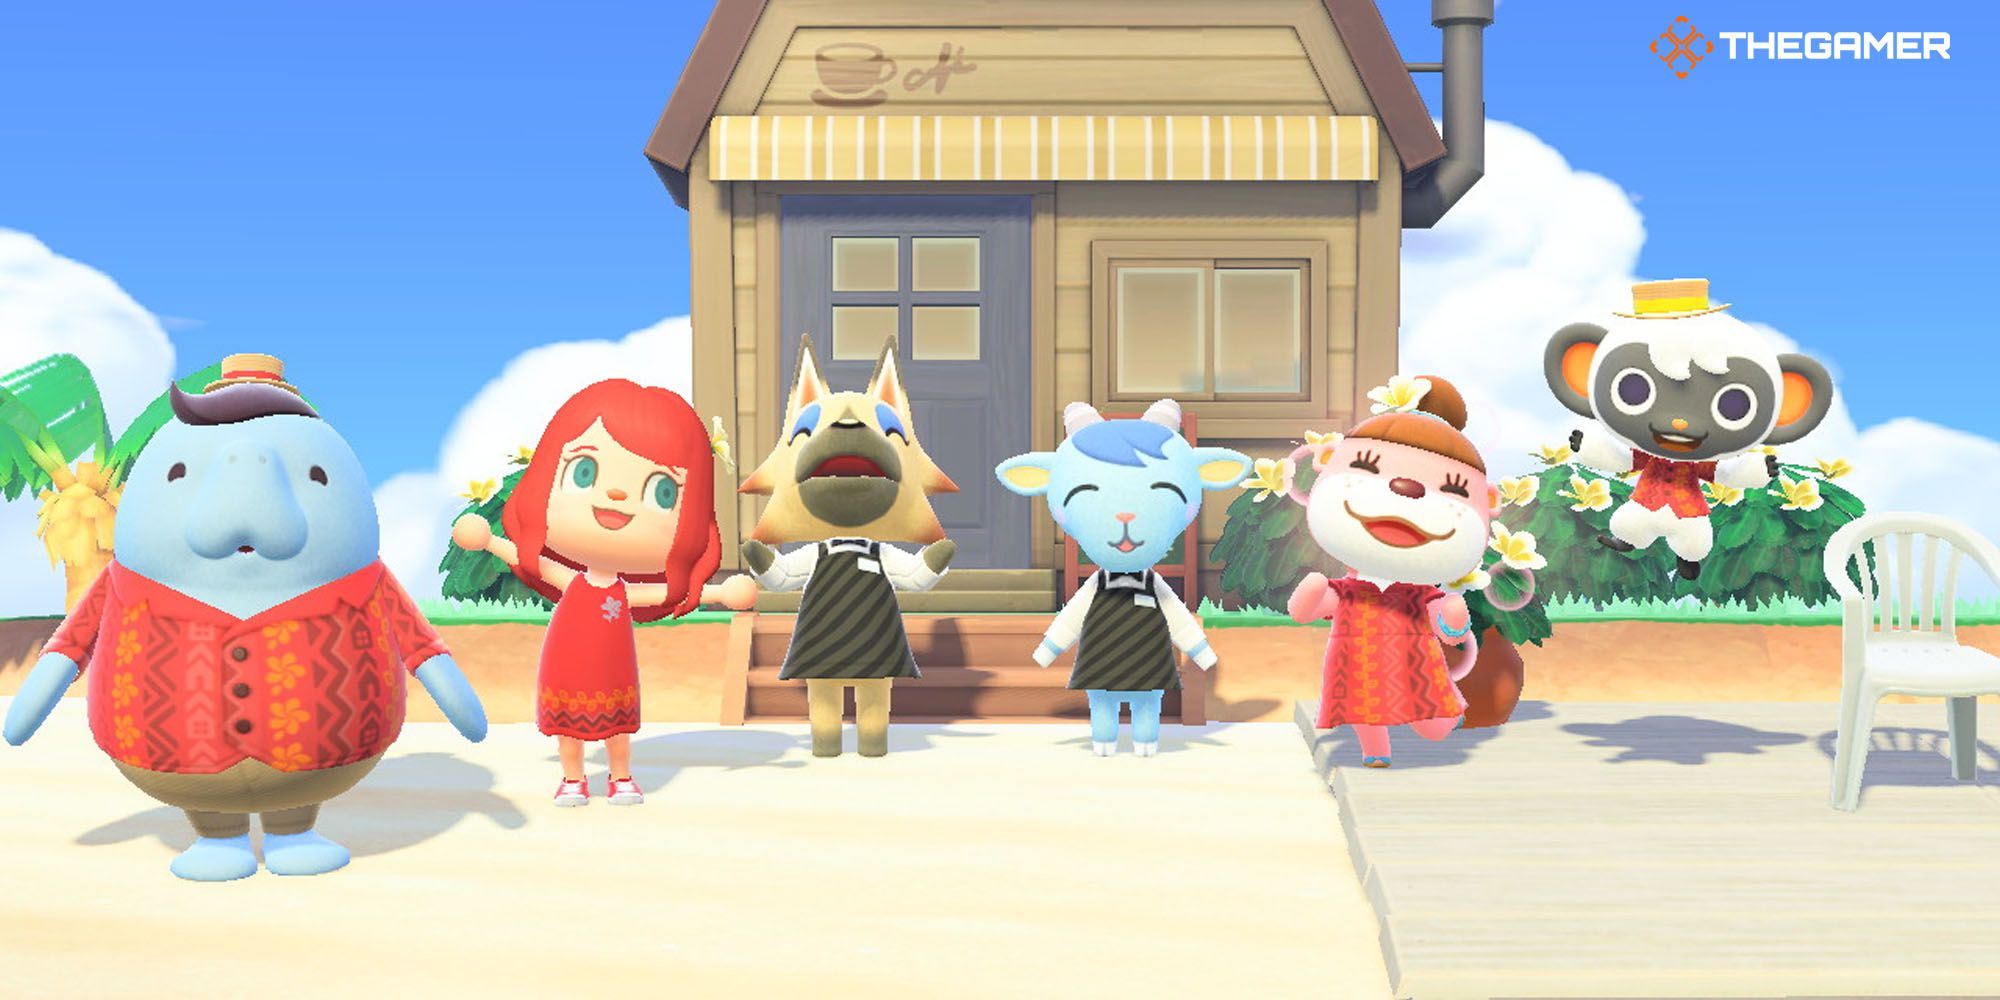 How to get Poki - Animal Crossing: New Horizons - Happy Home Paradise